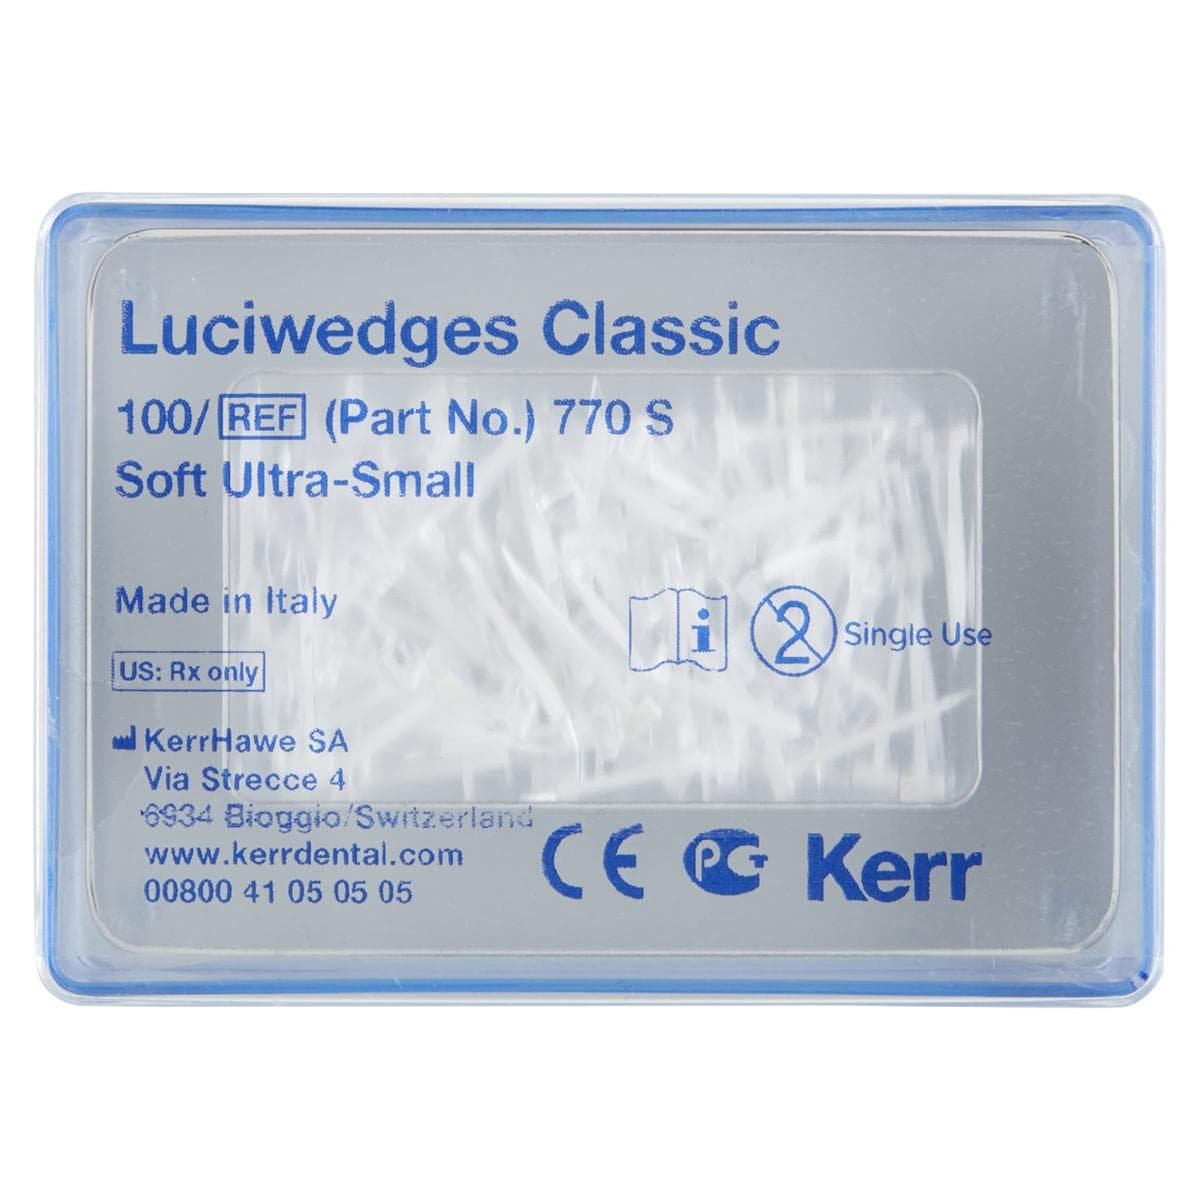 Luciwedge Soft - n 770S soft x-small